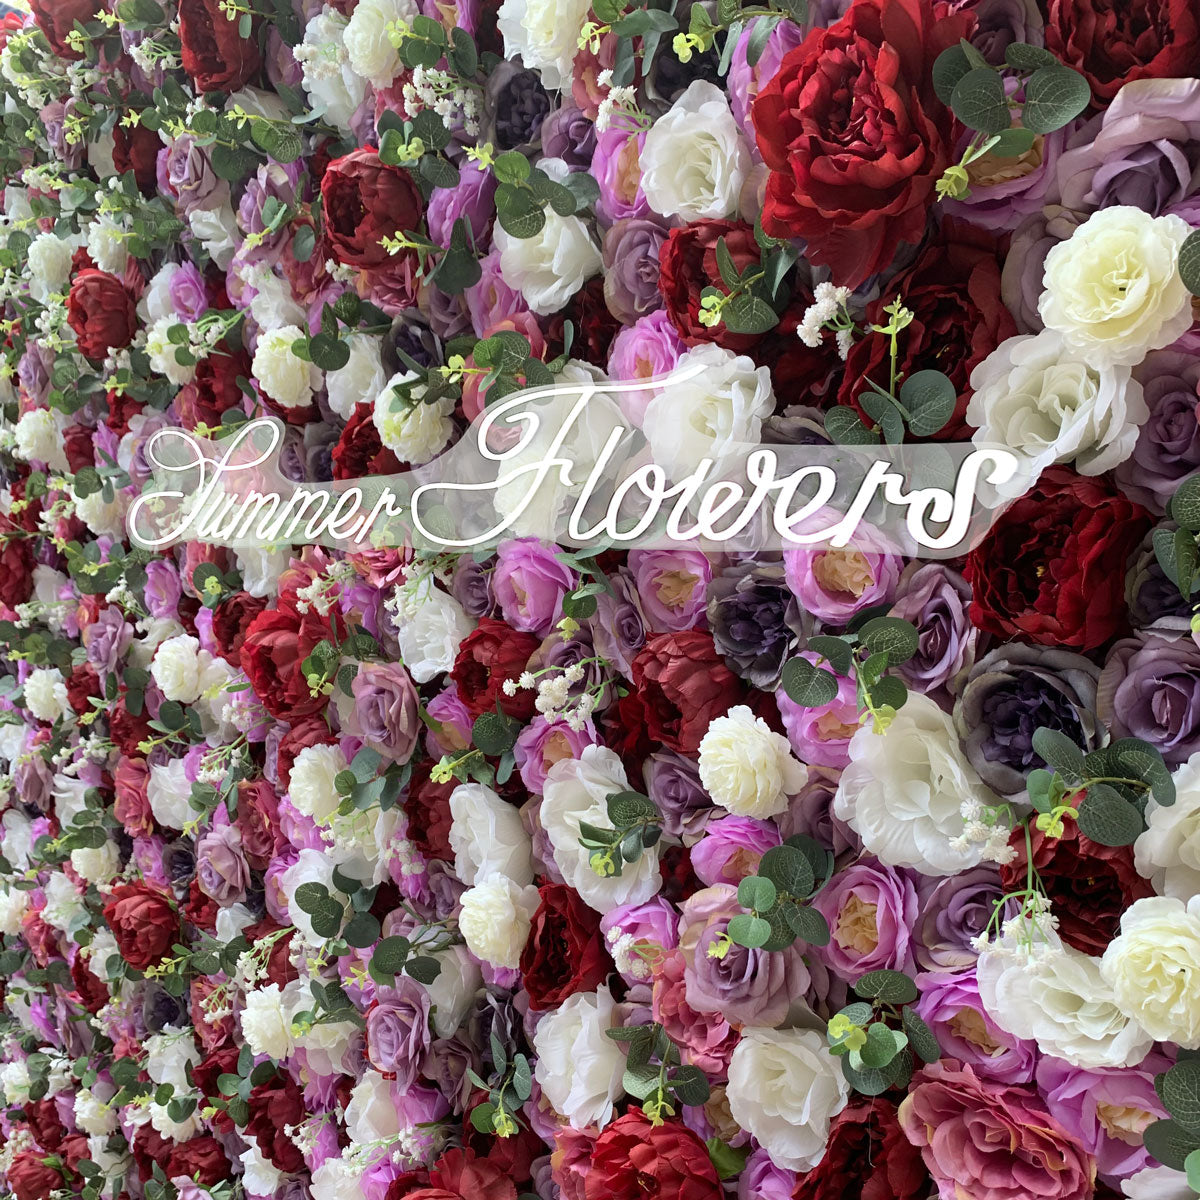 Summer Flower:CB-159 8ft*8ft Cloth Back Artificial Flower Wall Backdrop